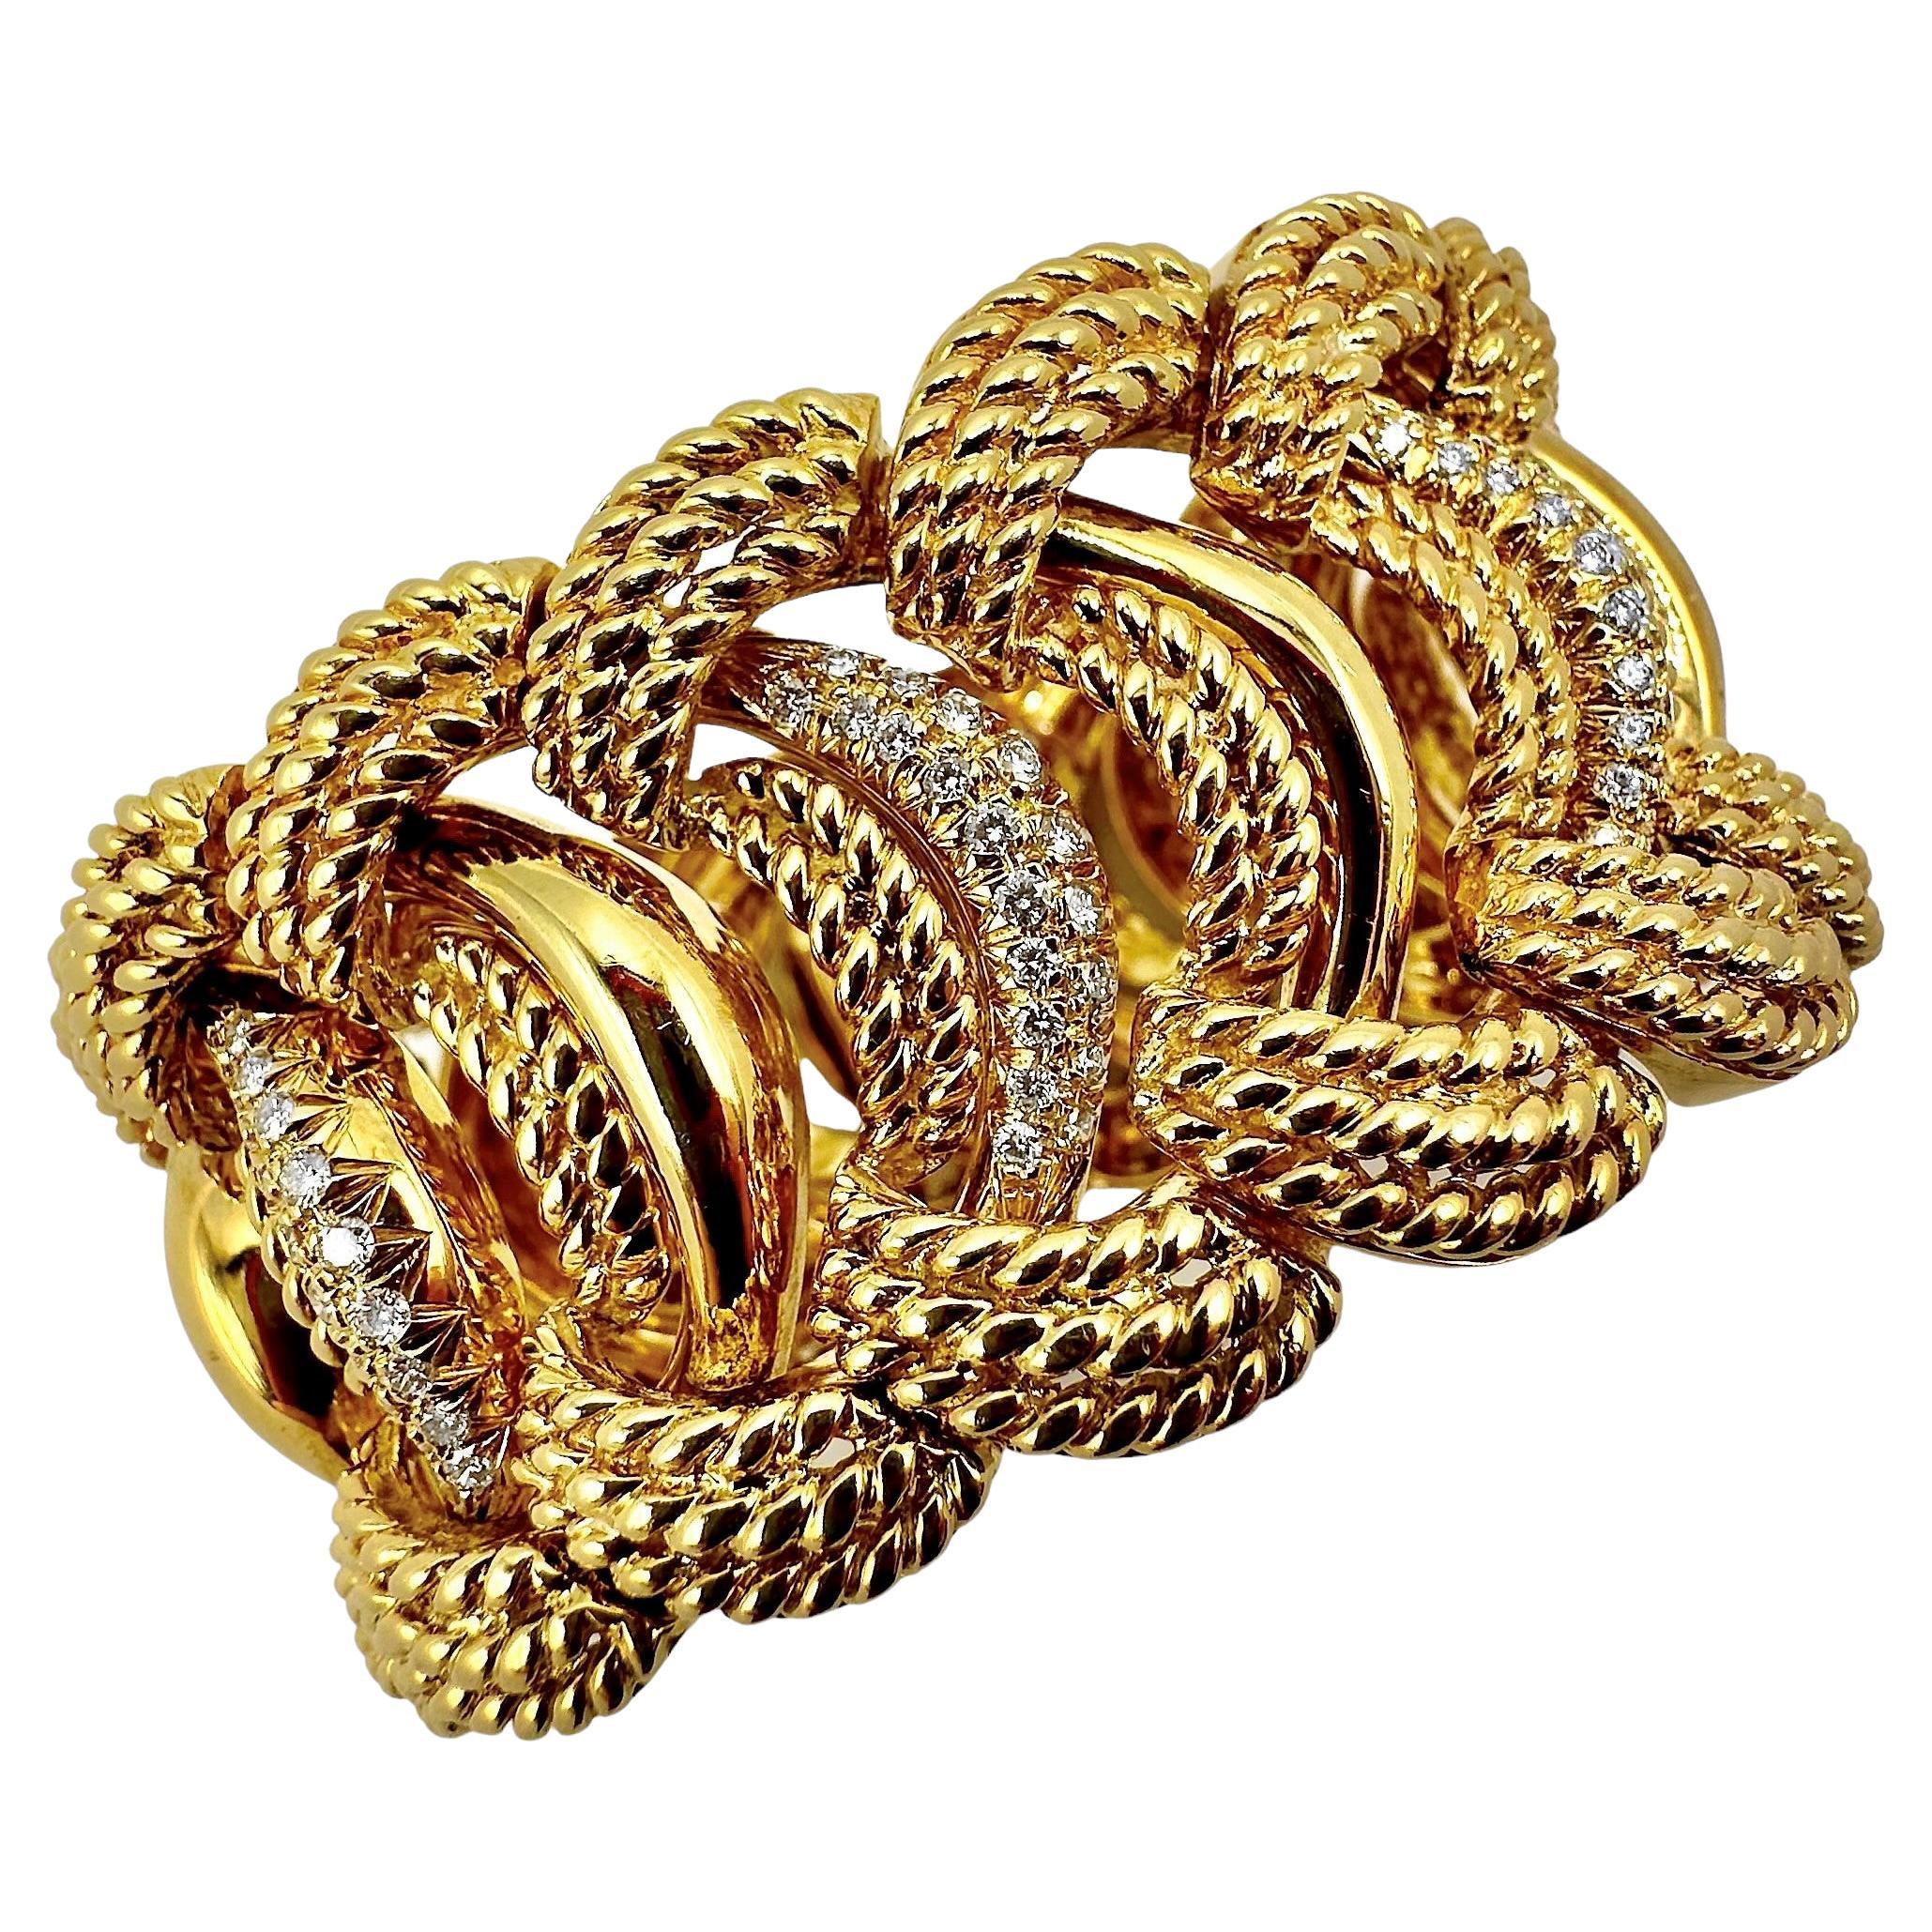 Magnificent Wide Mid-Century Italian 18K Yellow Gold & Diamond Cocktail Bracelet